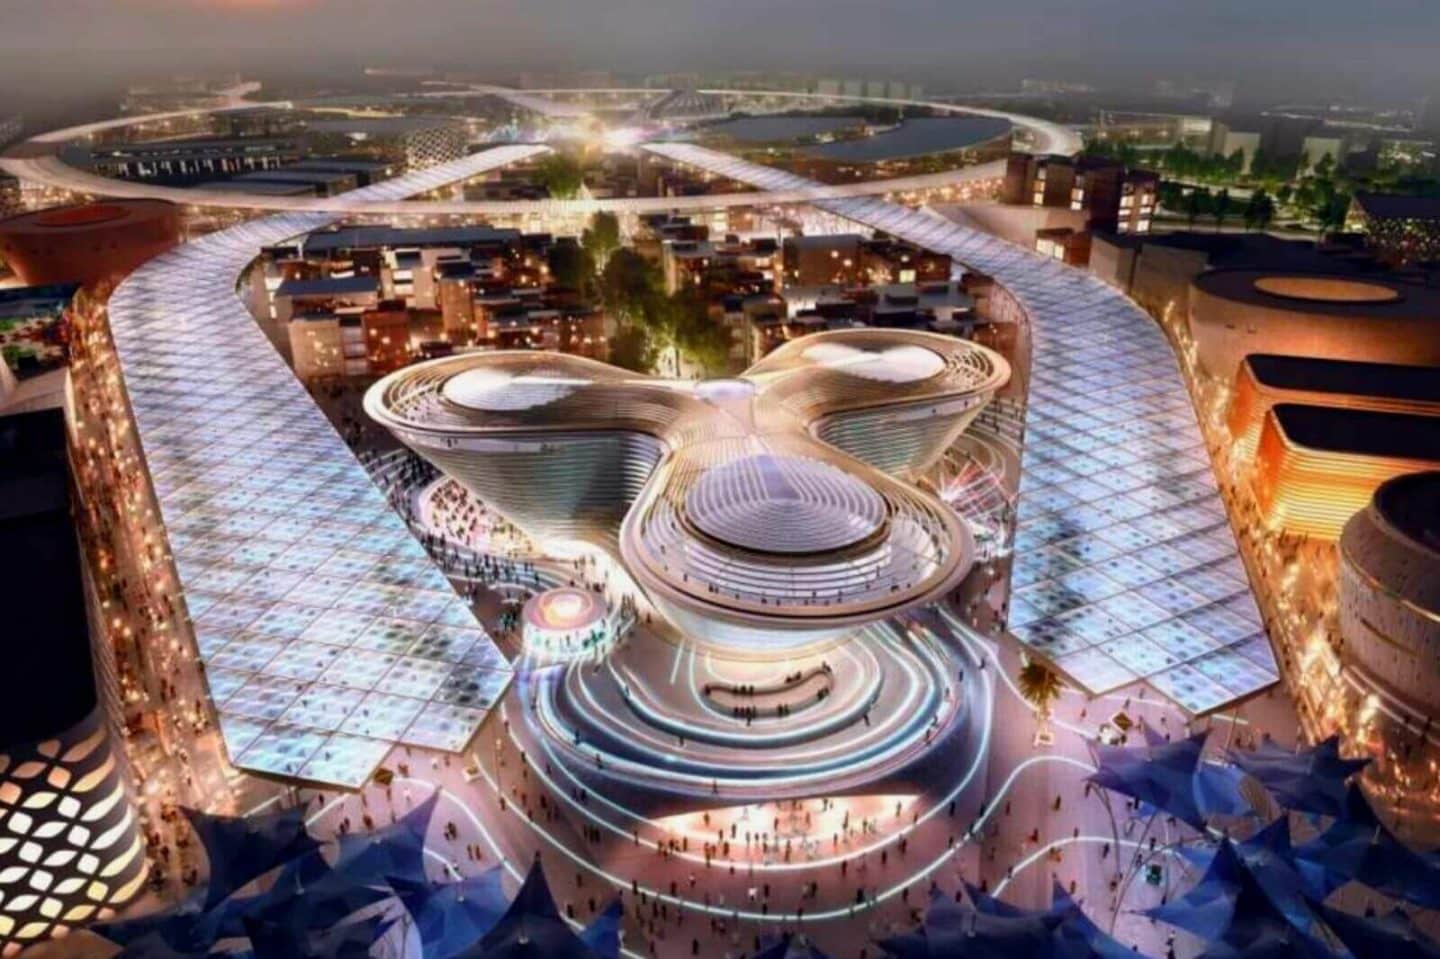 best pavilion in Dubai expo 2020 wewanderlustco wewanderlust.co shafeen shaheed waseem shaheed